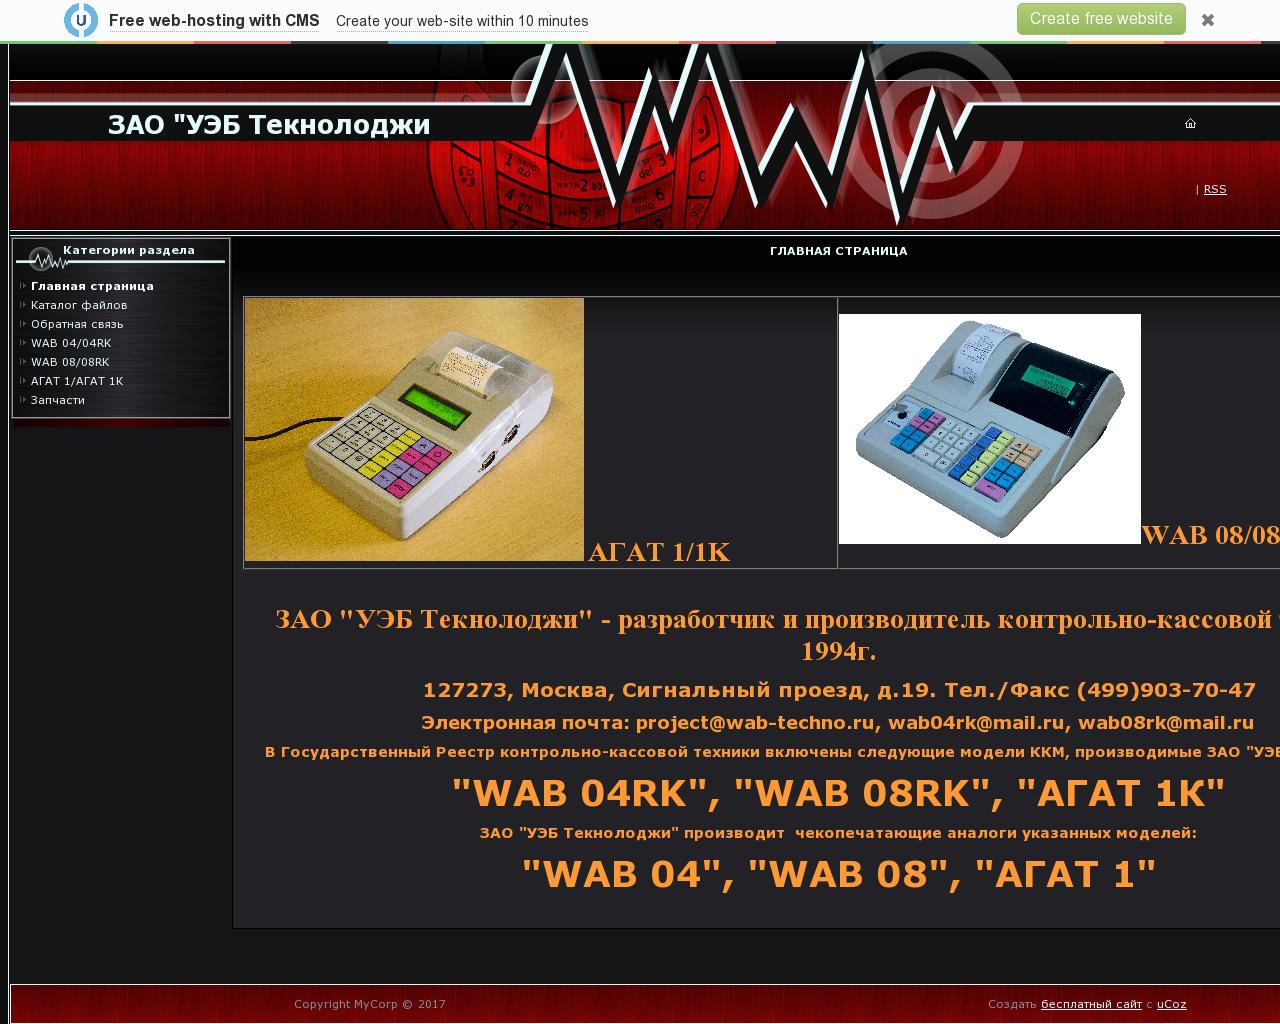 Изображение сайта wab-techno.ru в разрешении 1280x1024